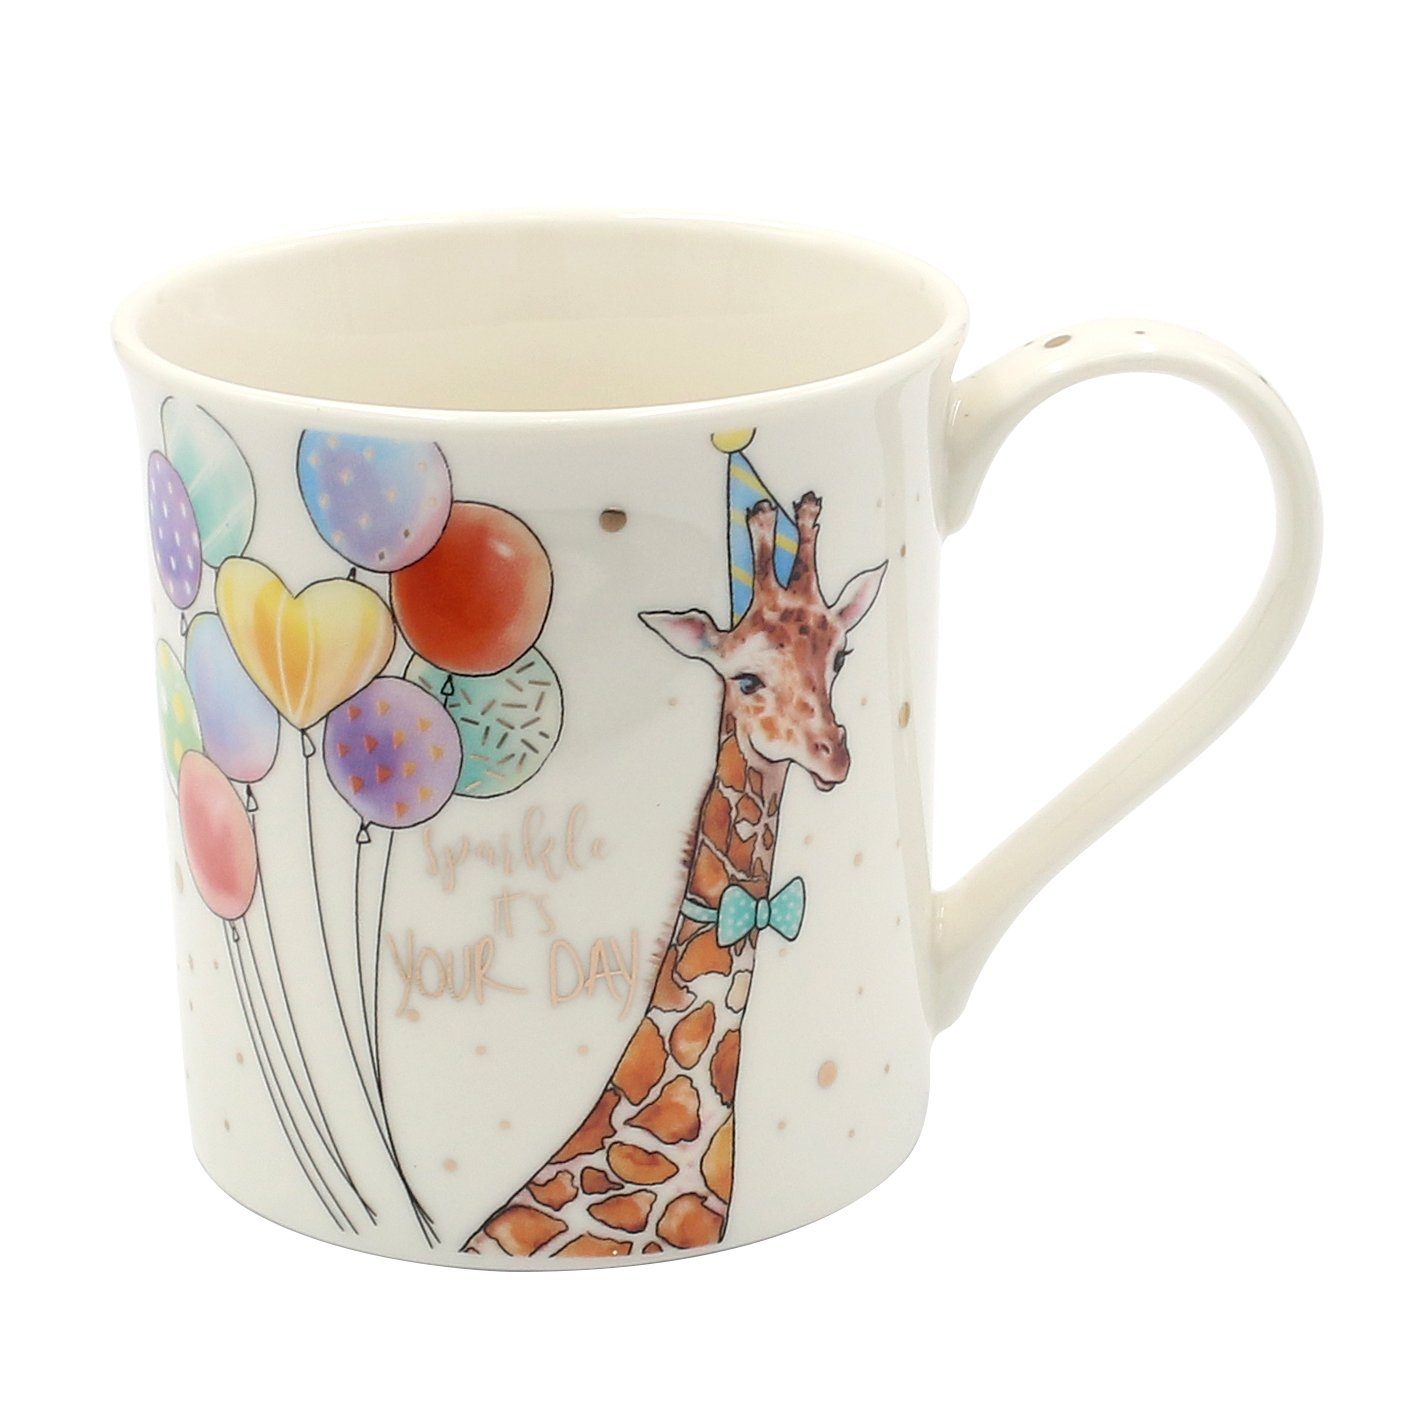 Dekohelden24 Tasse Kaffeebecher Kaffeetasse aus Porzellan - Geburtstagstassen Giraffe, Porzellan bunt